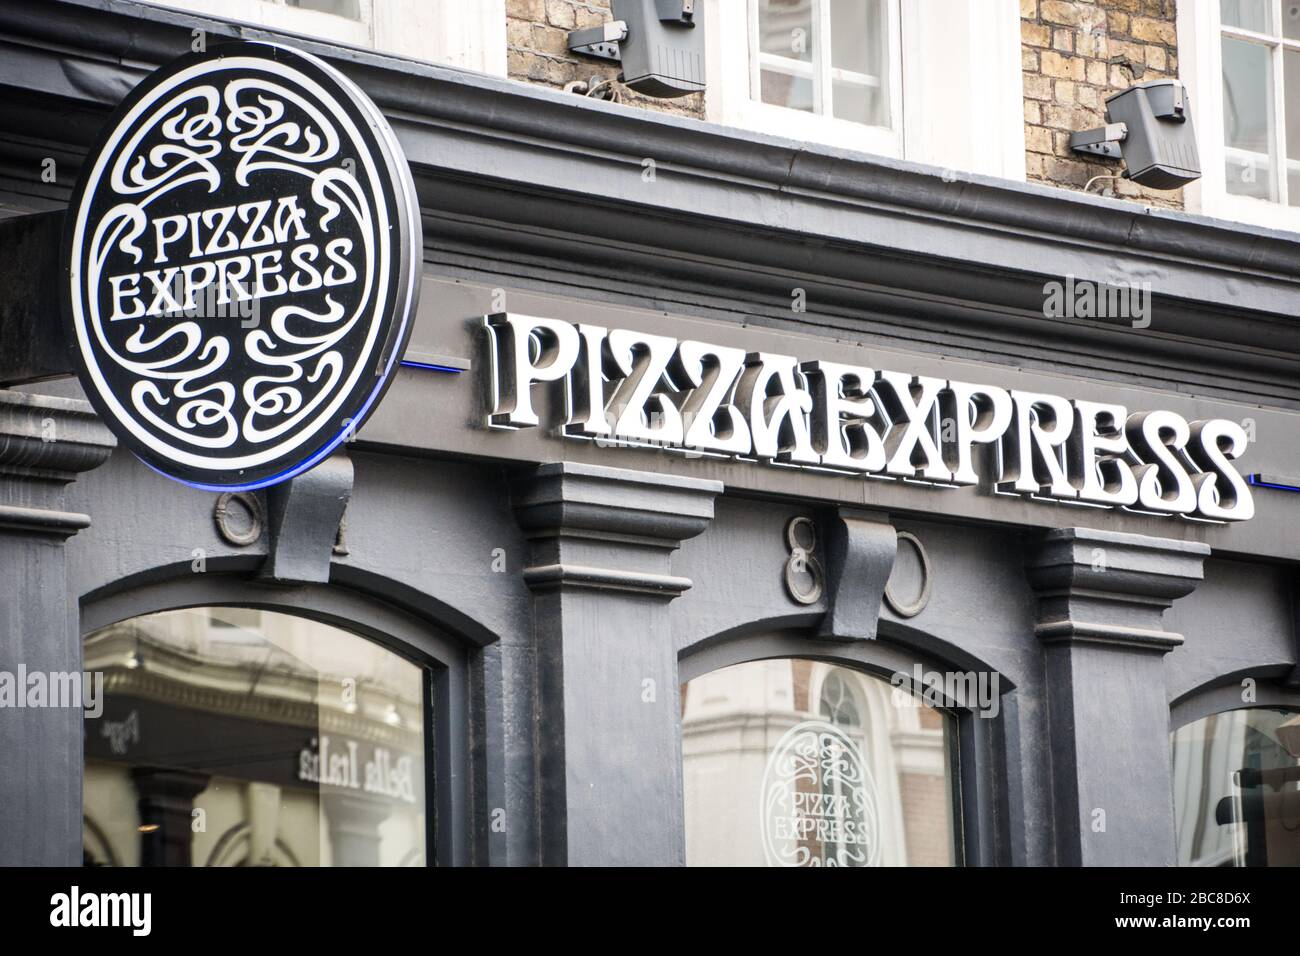 Pizza Express branch, exterior logo / signage- London Stock Photo